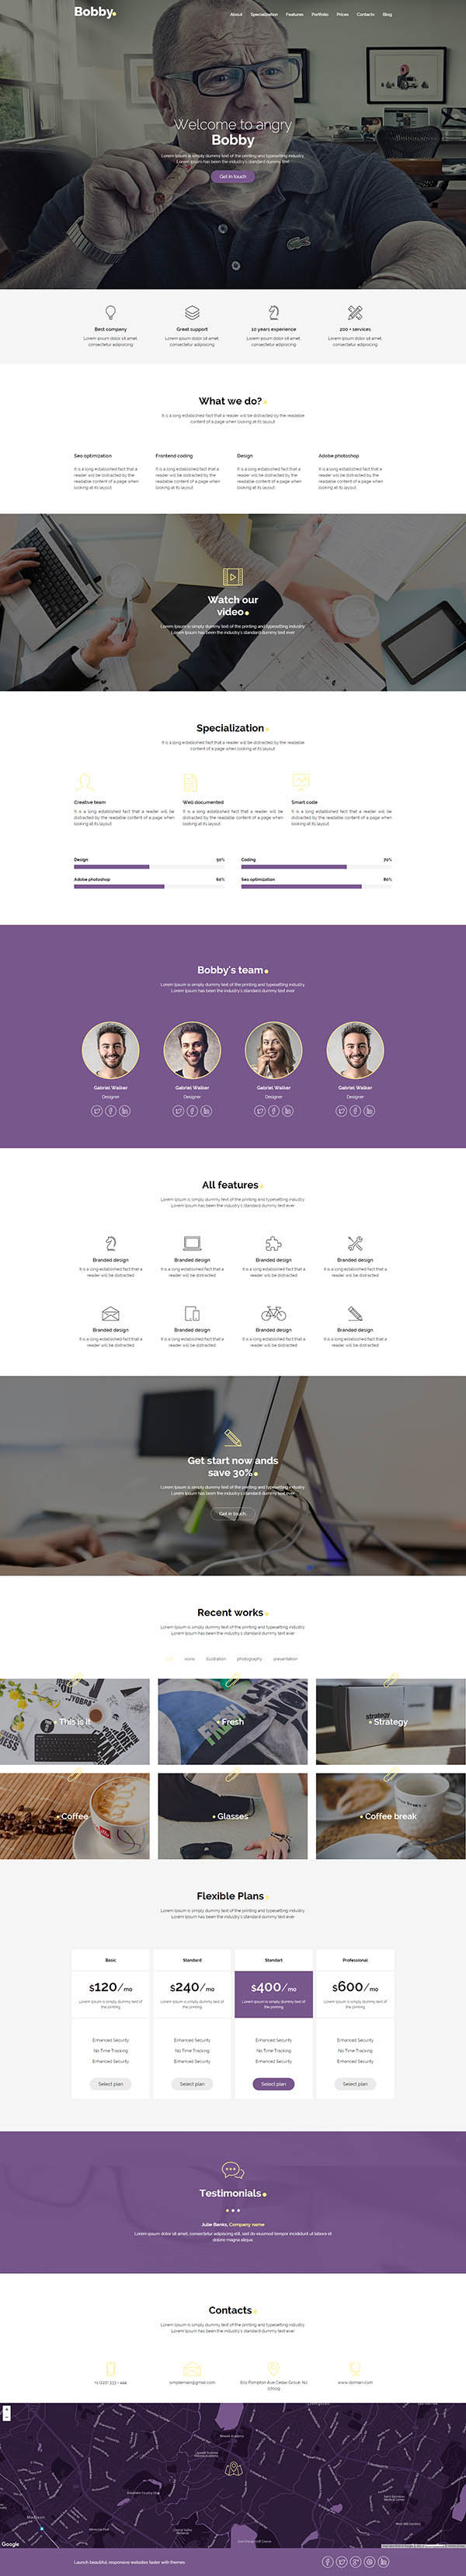 Bobby - Multipurpose Creative Service Landing Page